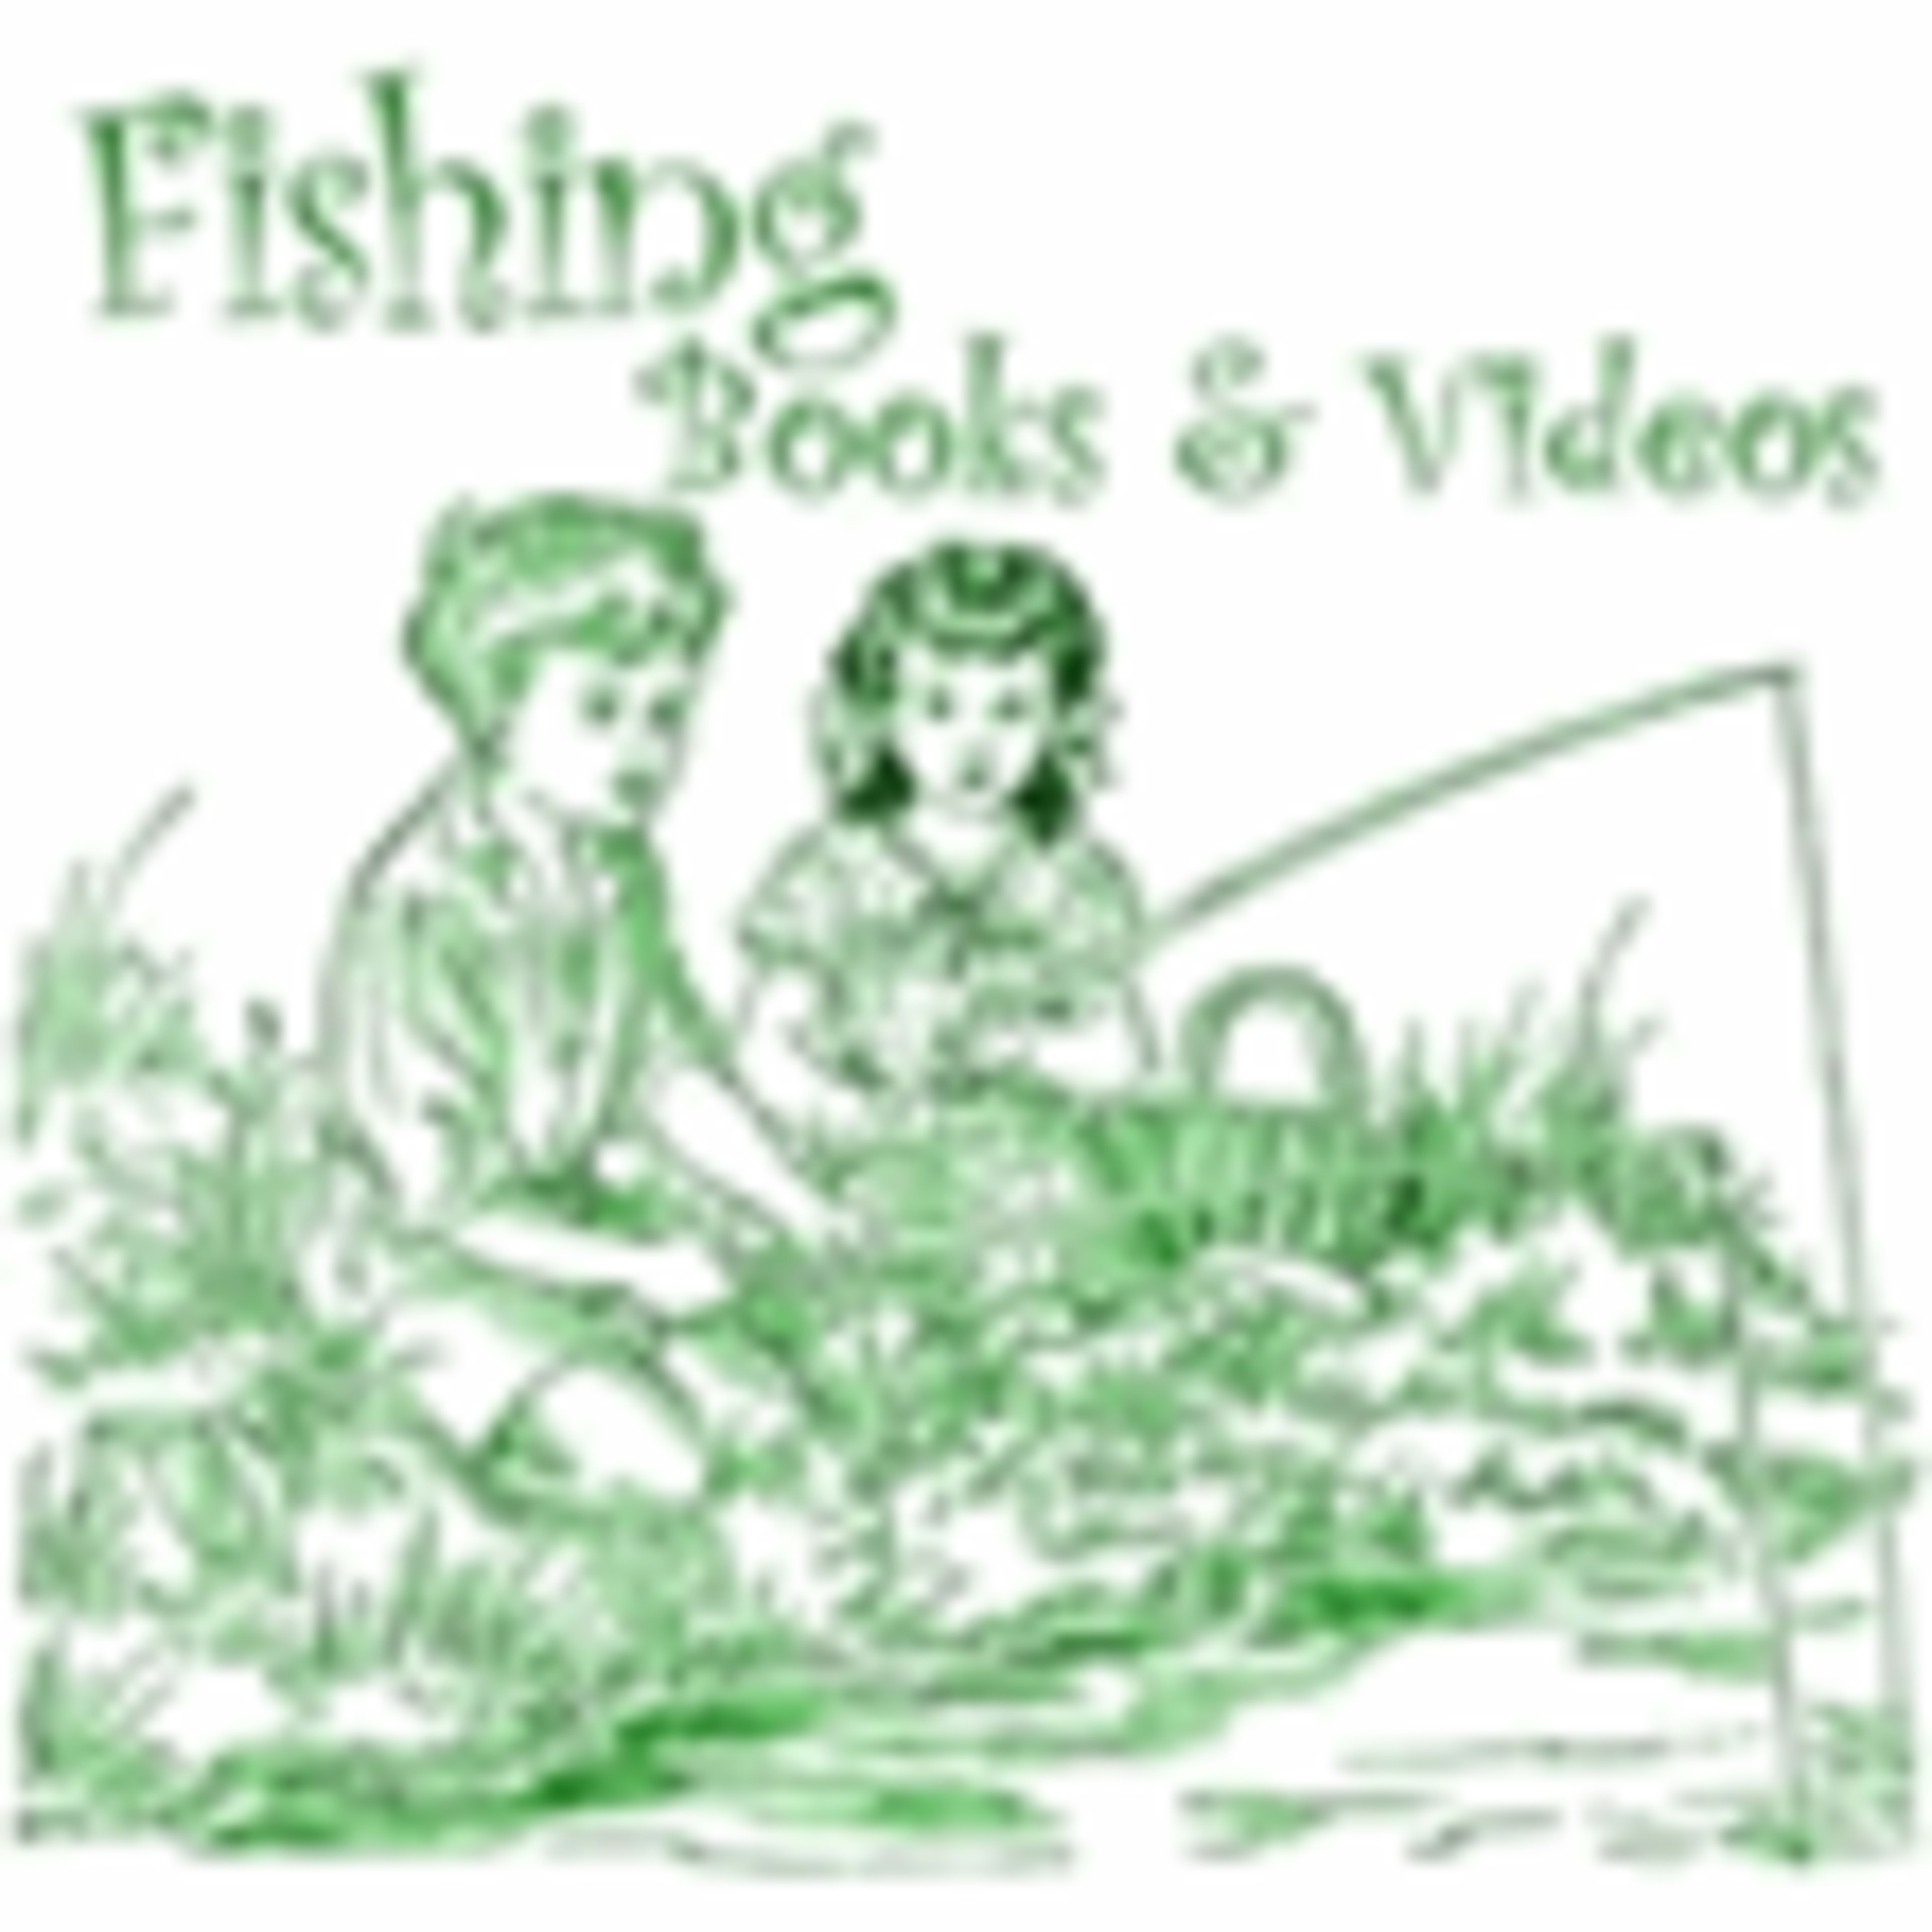 Fishingbooksandvideos.com Code